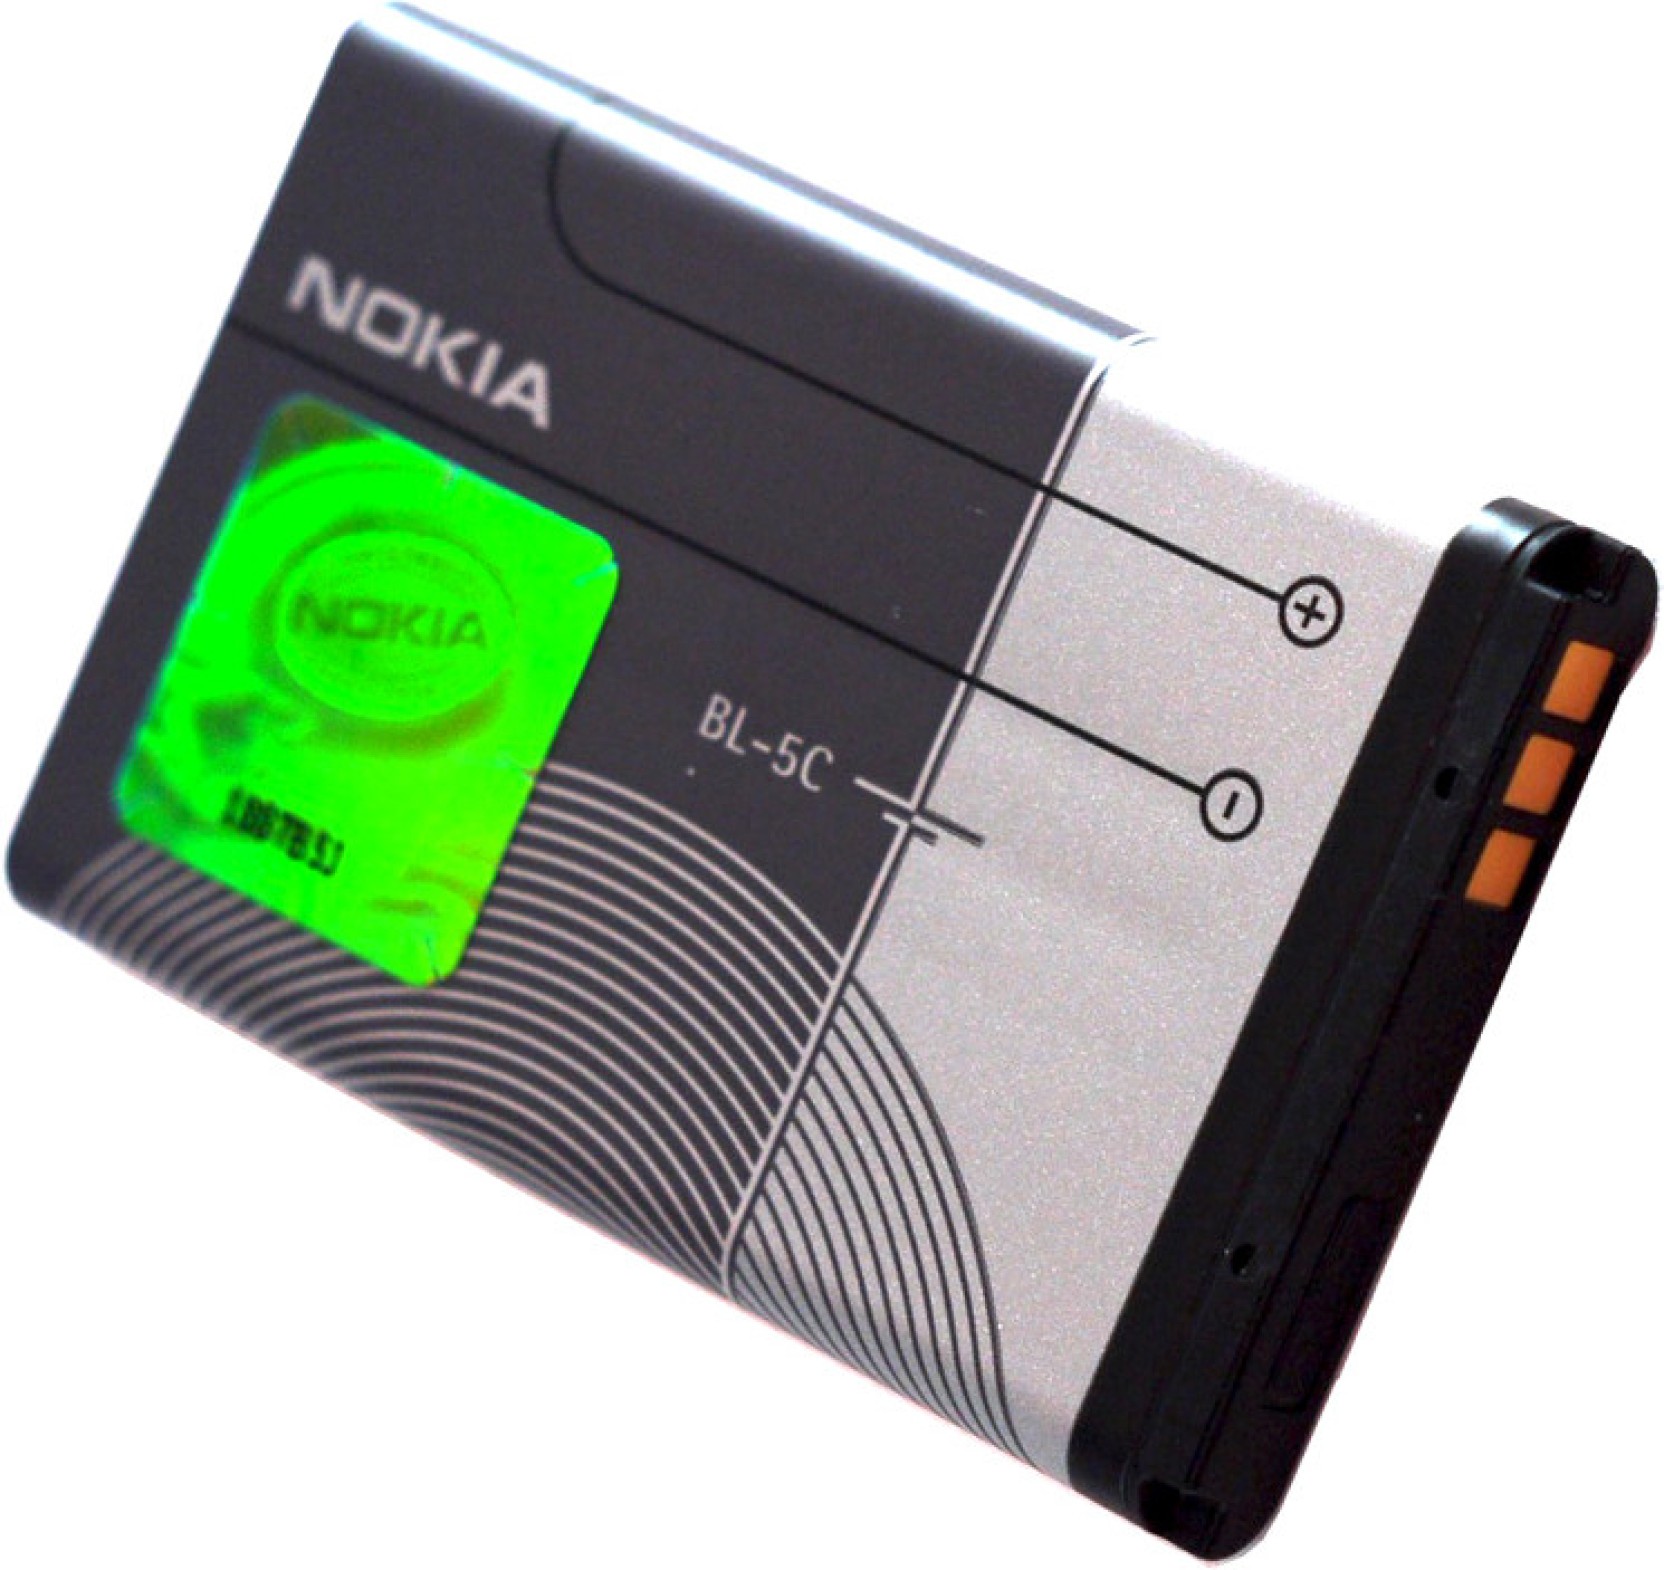 Аккумулятор телефона срок. Nokia BL-5c 1020. Батарея нокиа BL-5c. Батарейка Nokia BL-5c. АКБ нокиа bl5c.